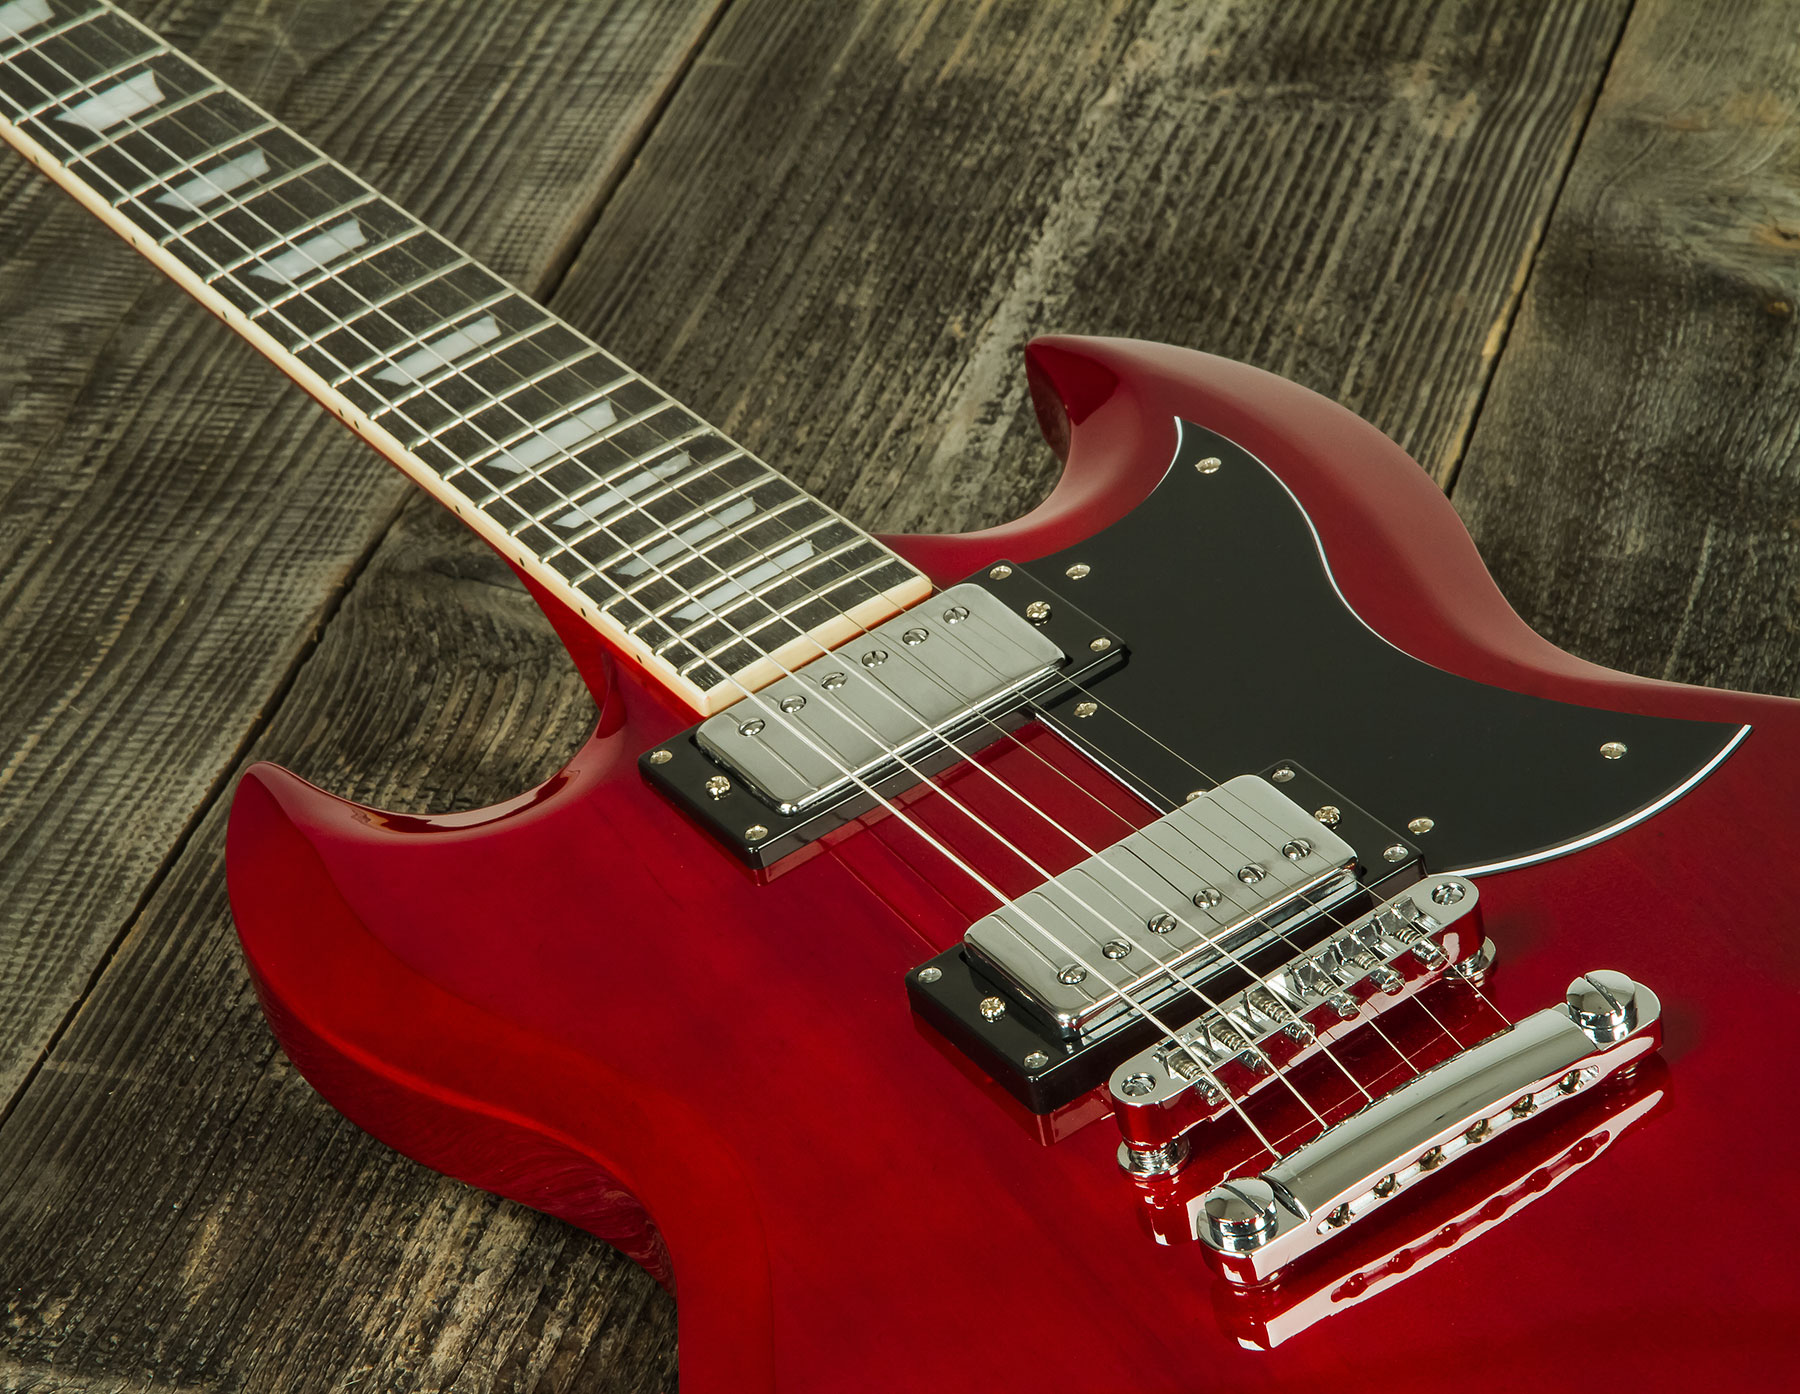 Eastone Sdc70 +marshall Mg10g Gold +cable +housse +courroie +mediators - Red - Elektrische gitaar set - Variation 4